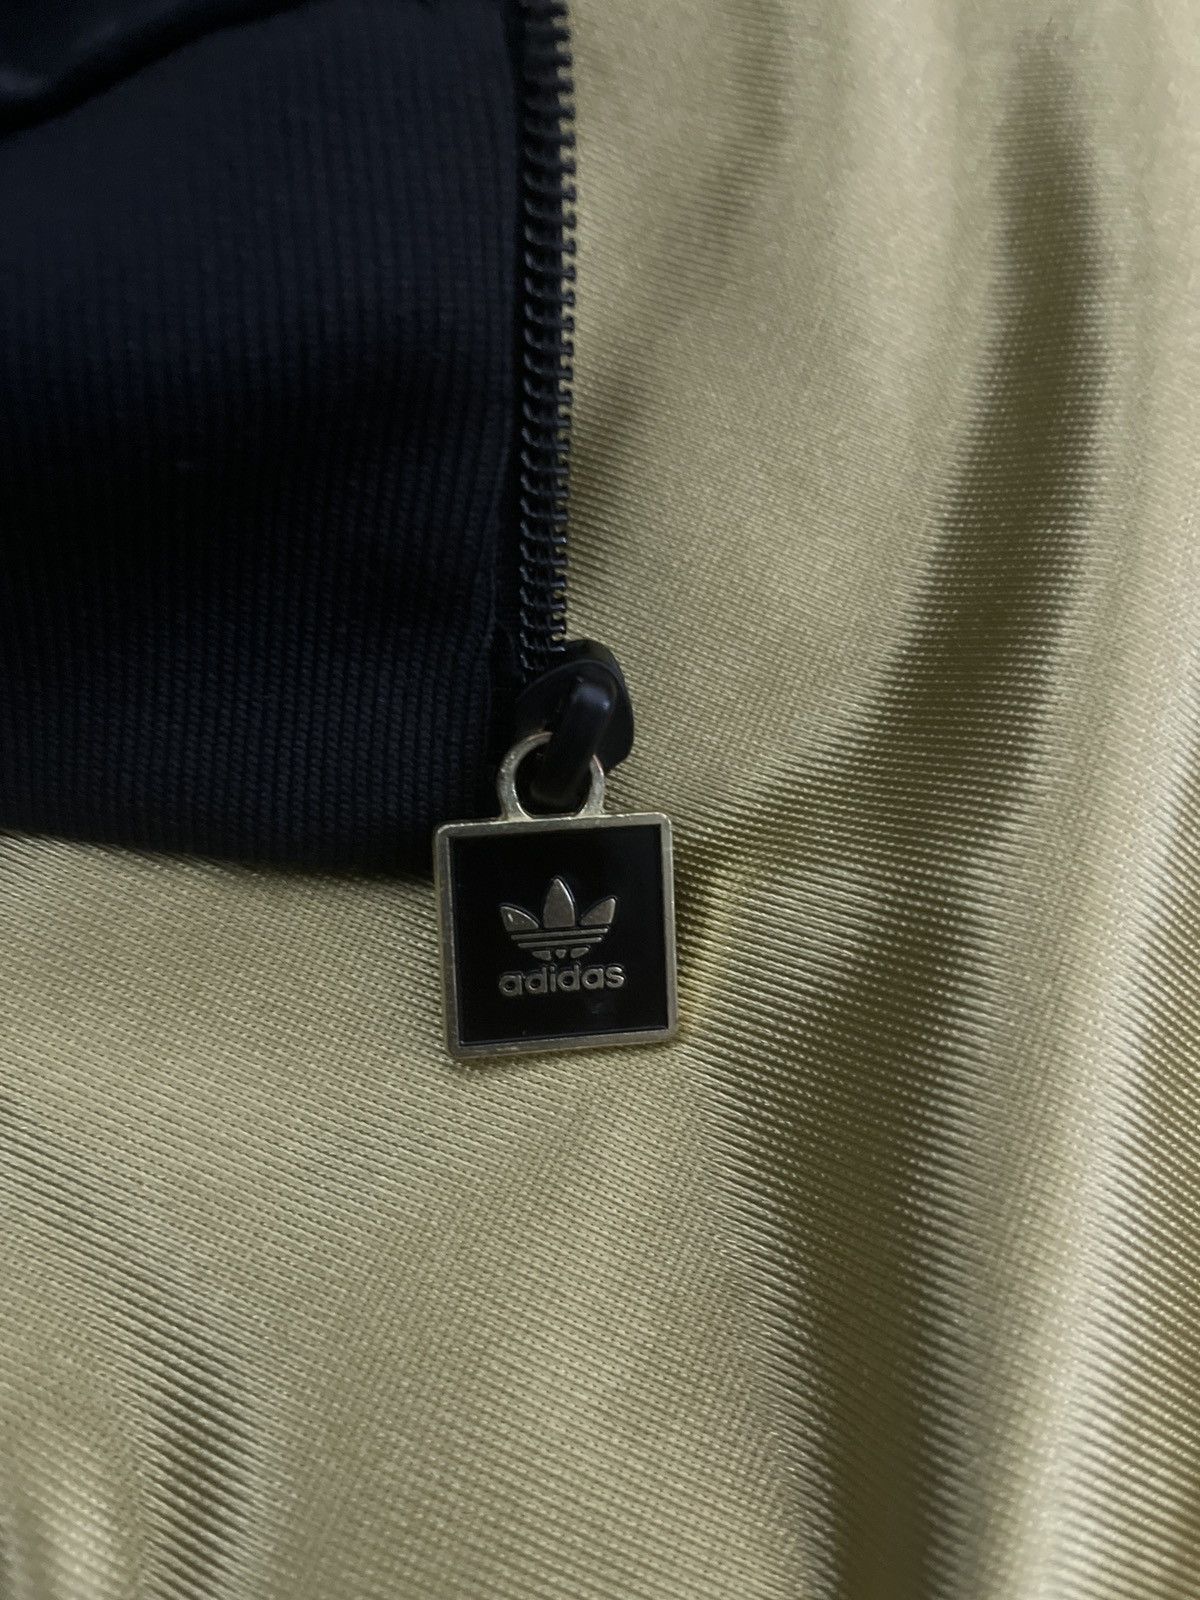 Adidas RARE Adidas Chile 62 Tracksuit Jacket Size US L / EU 52-54 / 3 - 5 Thumbnail